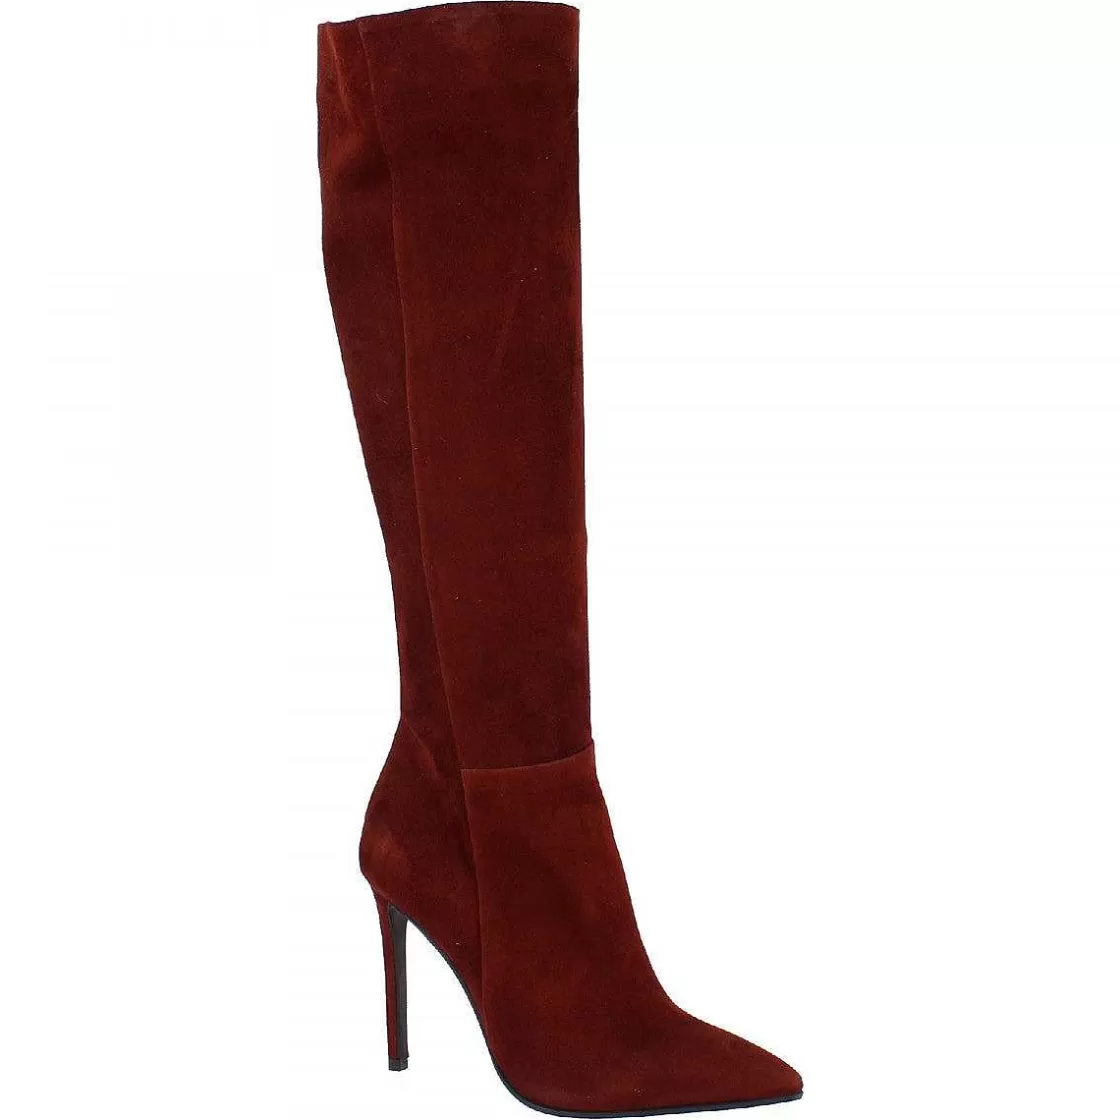 Leonardo Handmade Women'S Pointed Toe Stiletto Heel Knee High Boots In Burgundy Suede Leather Cheap